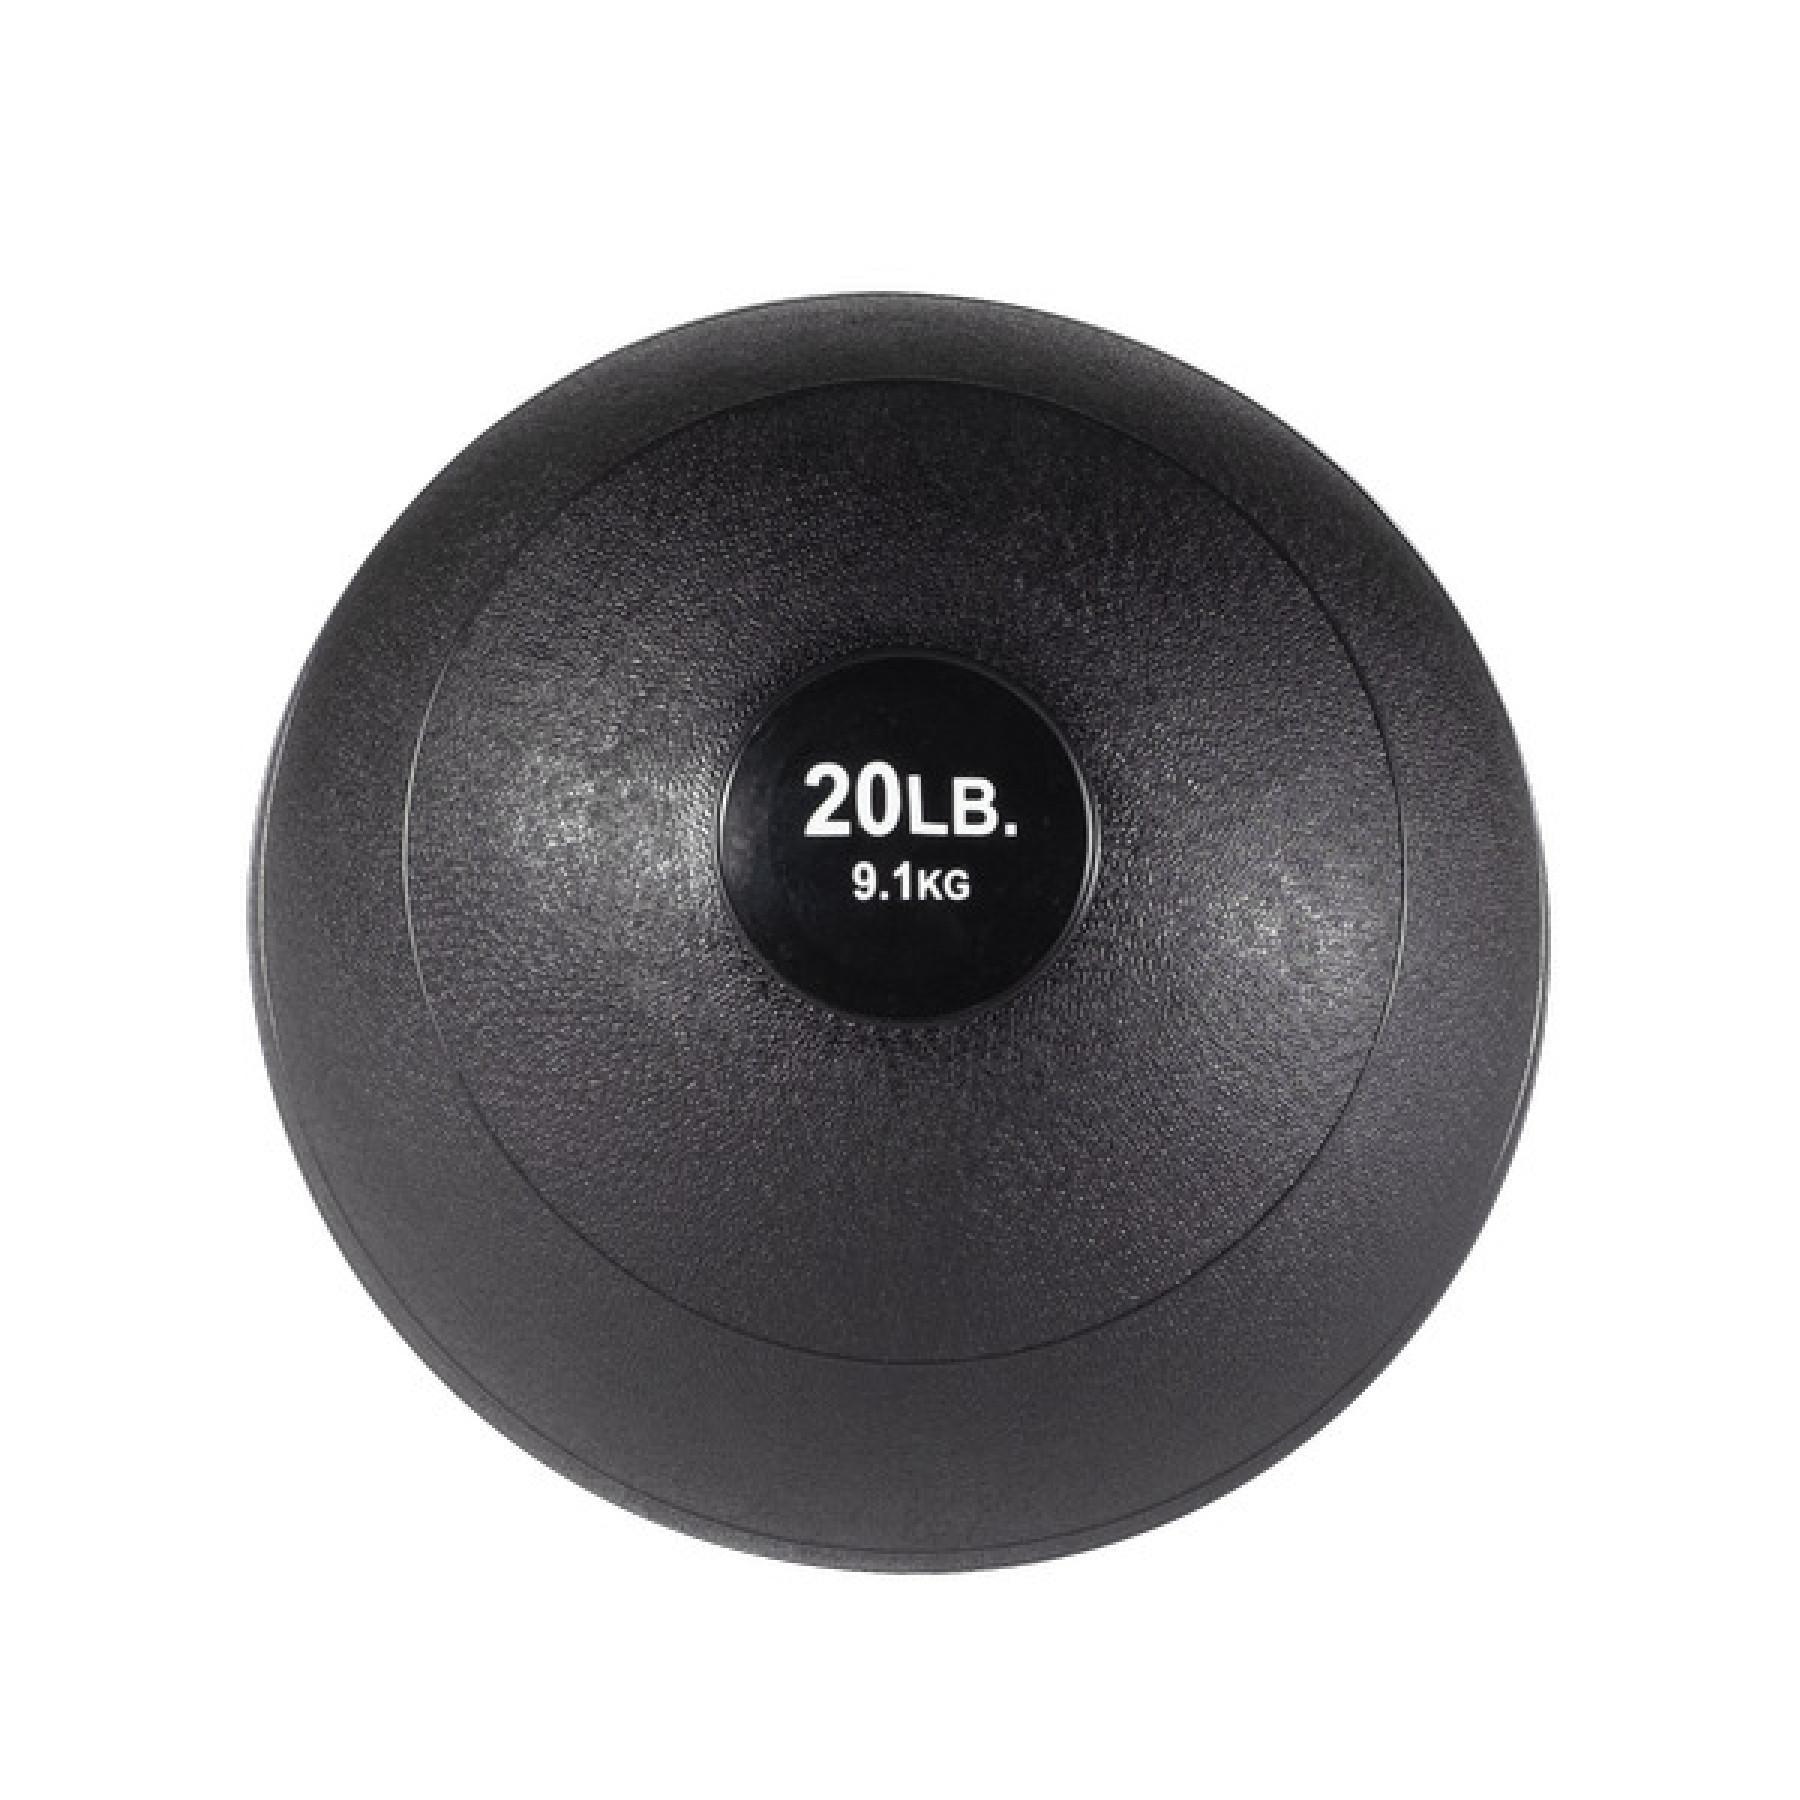 Slam ball 15 lbs - 6.8 kg Body Solid